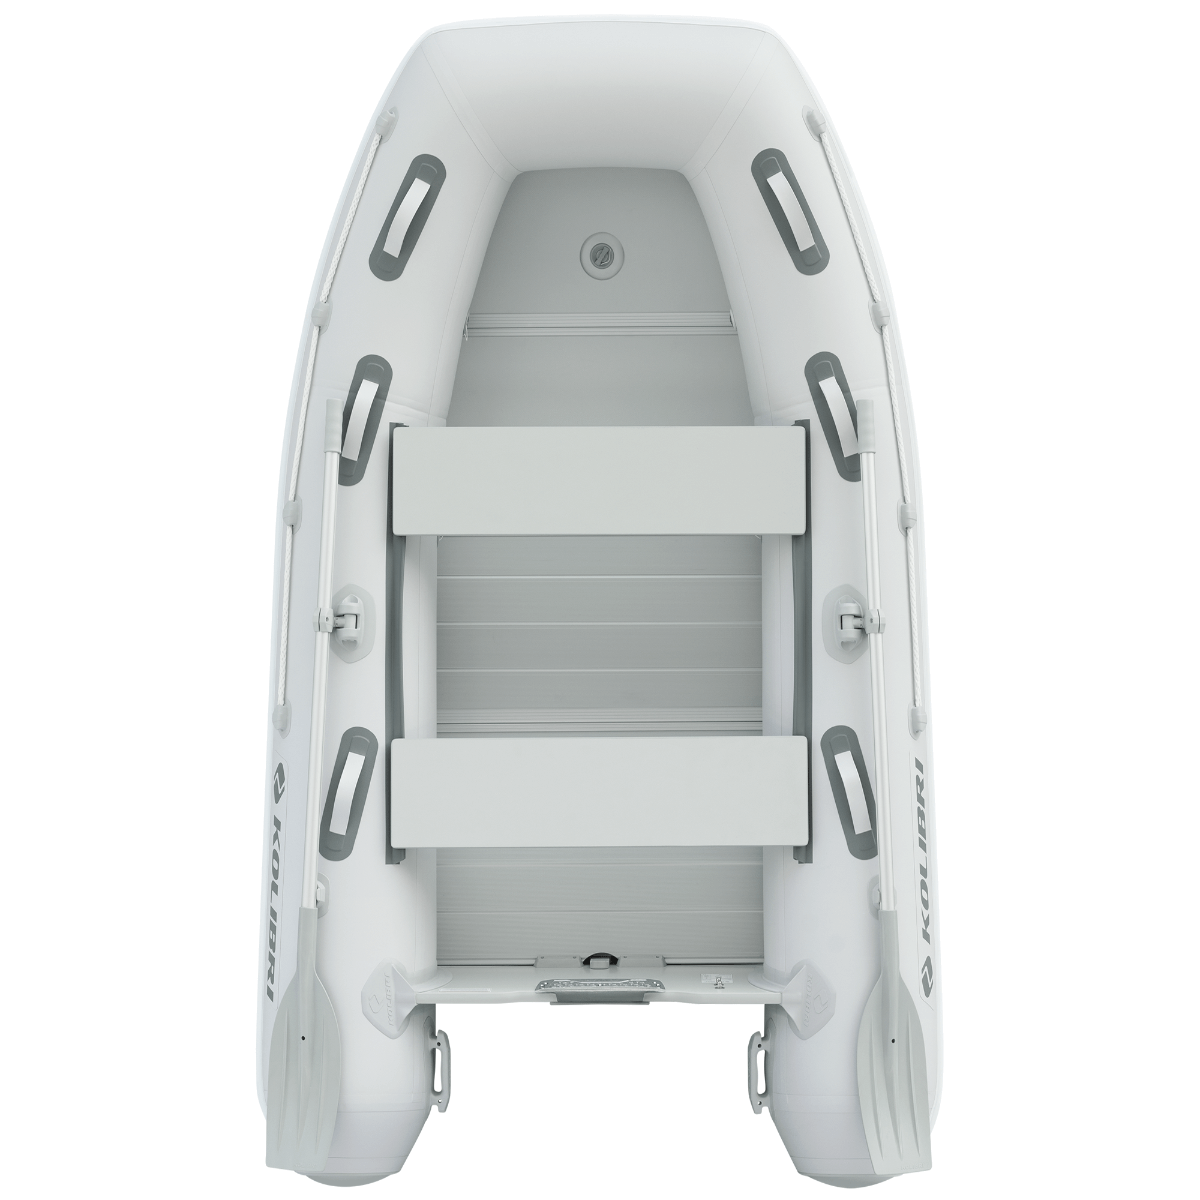 Kolibri KM-270DXL (8'10") inflatable boat